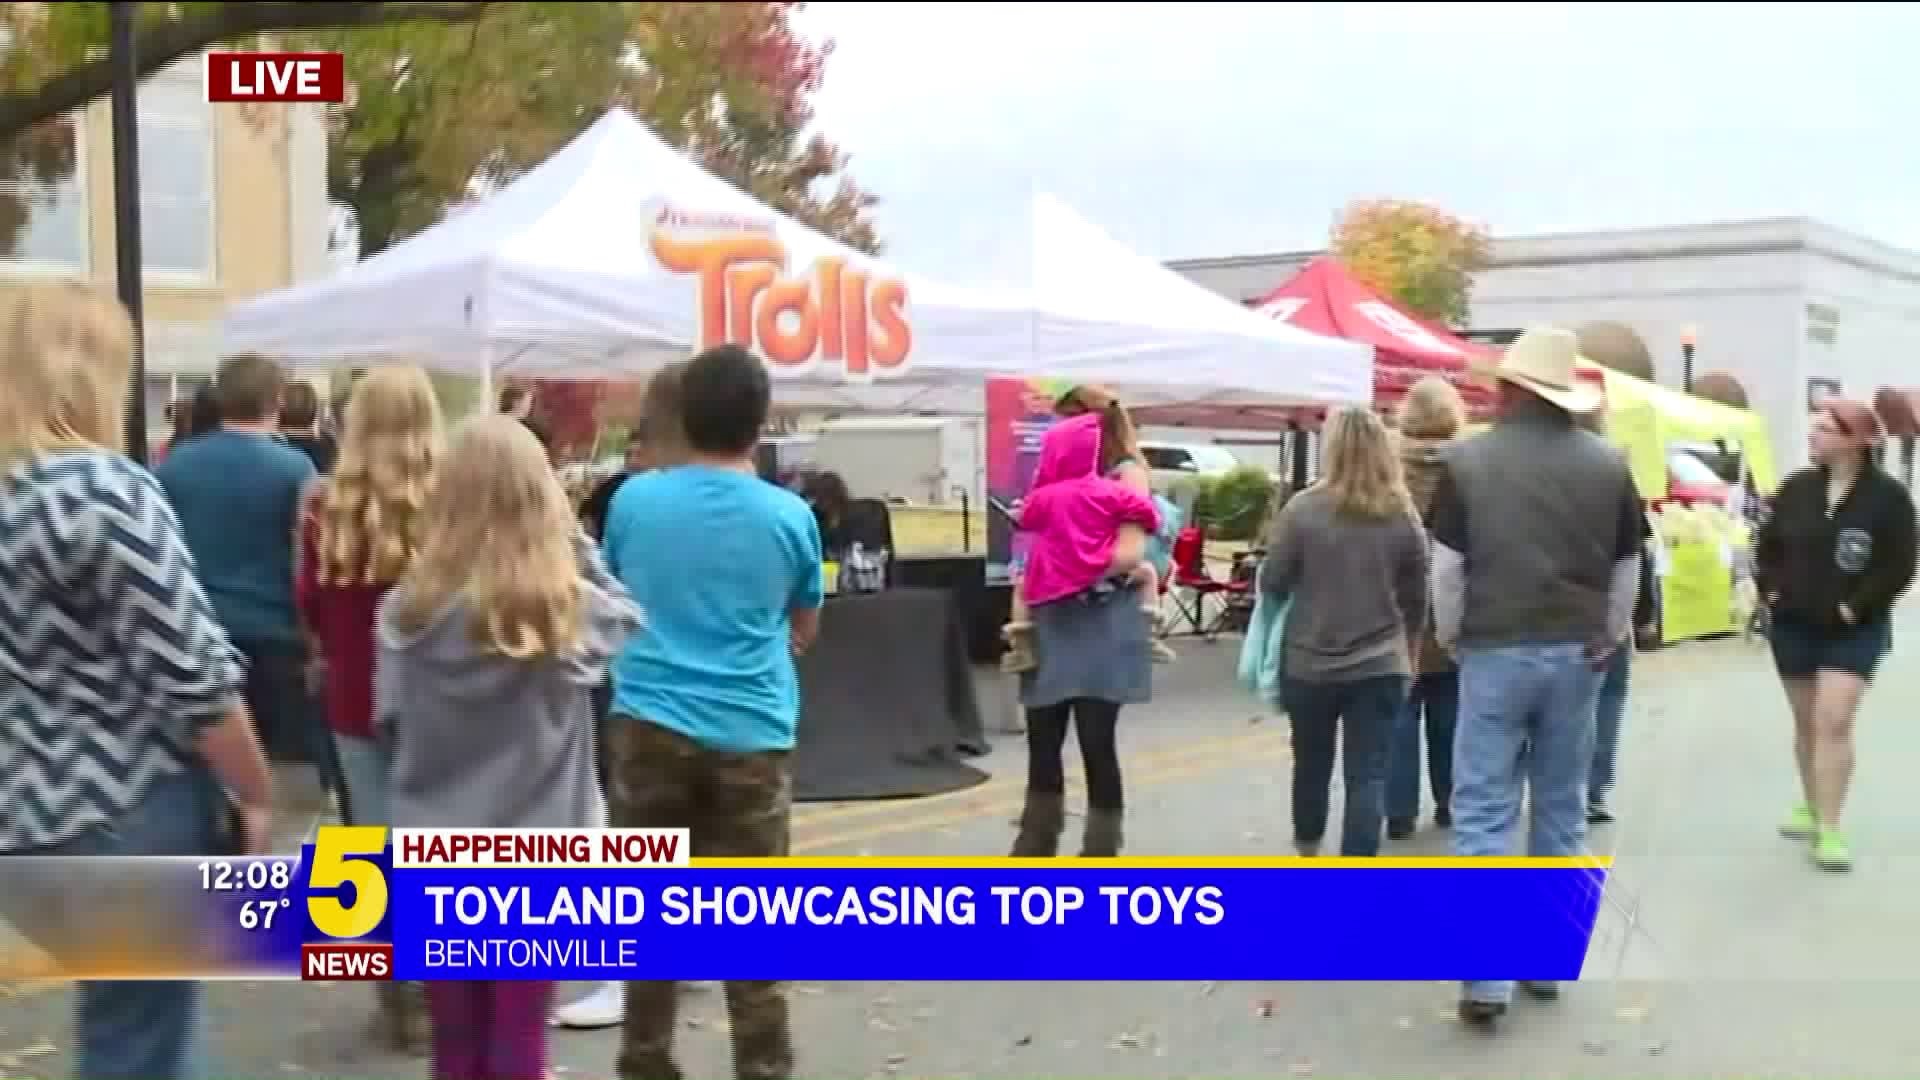 Toyland Showcasing Top Toys